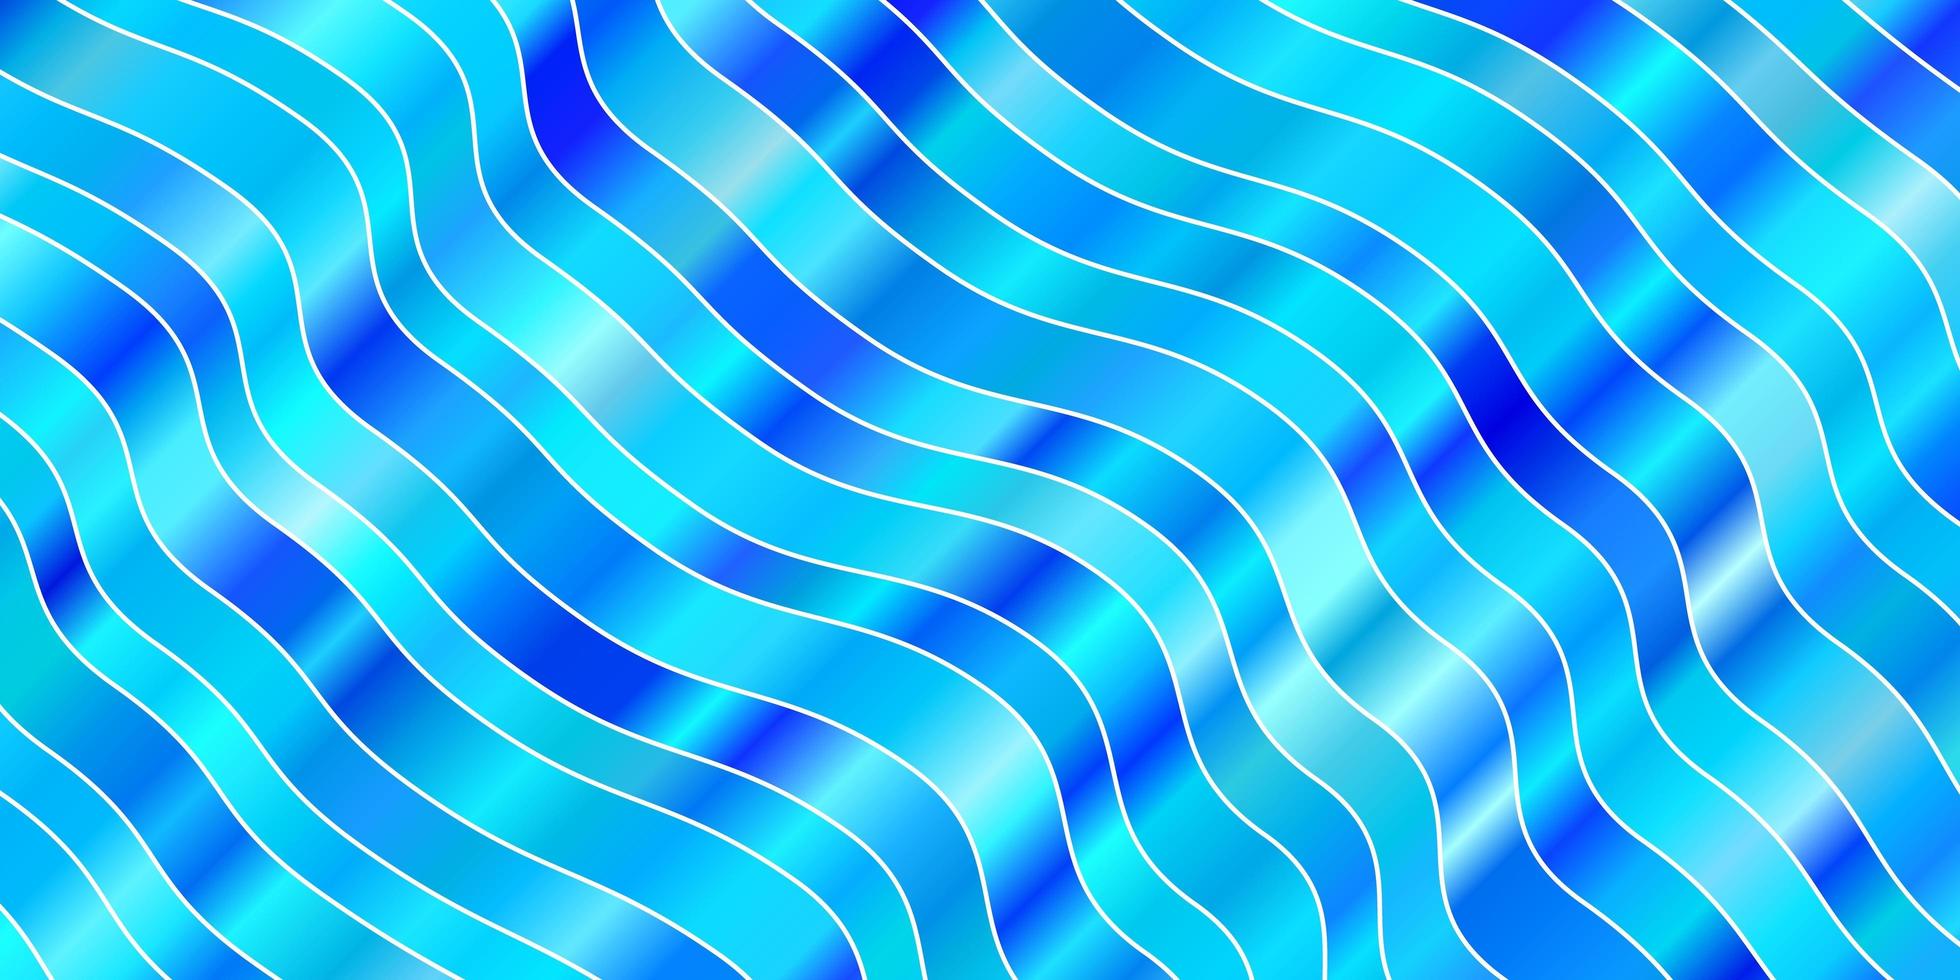 ljusblå vektorlayout med sneda linjer. vektor